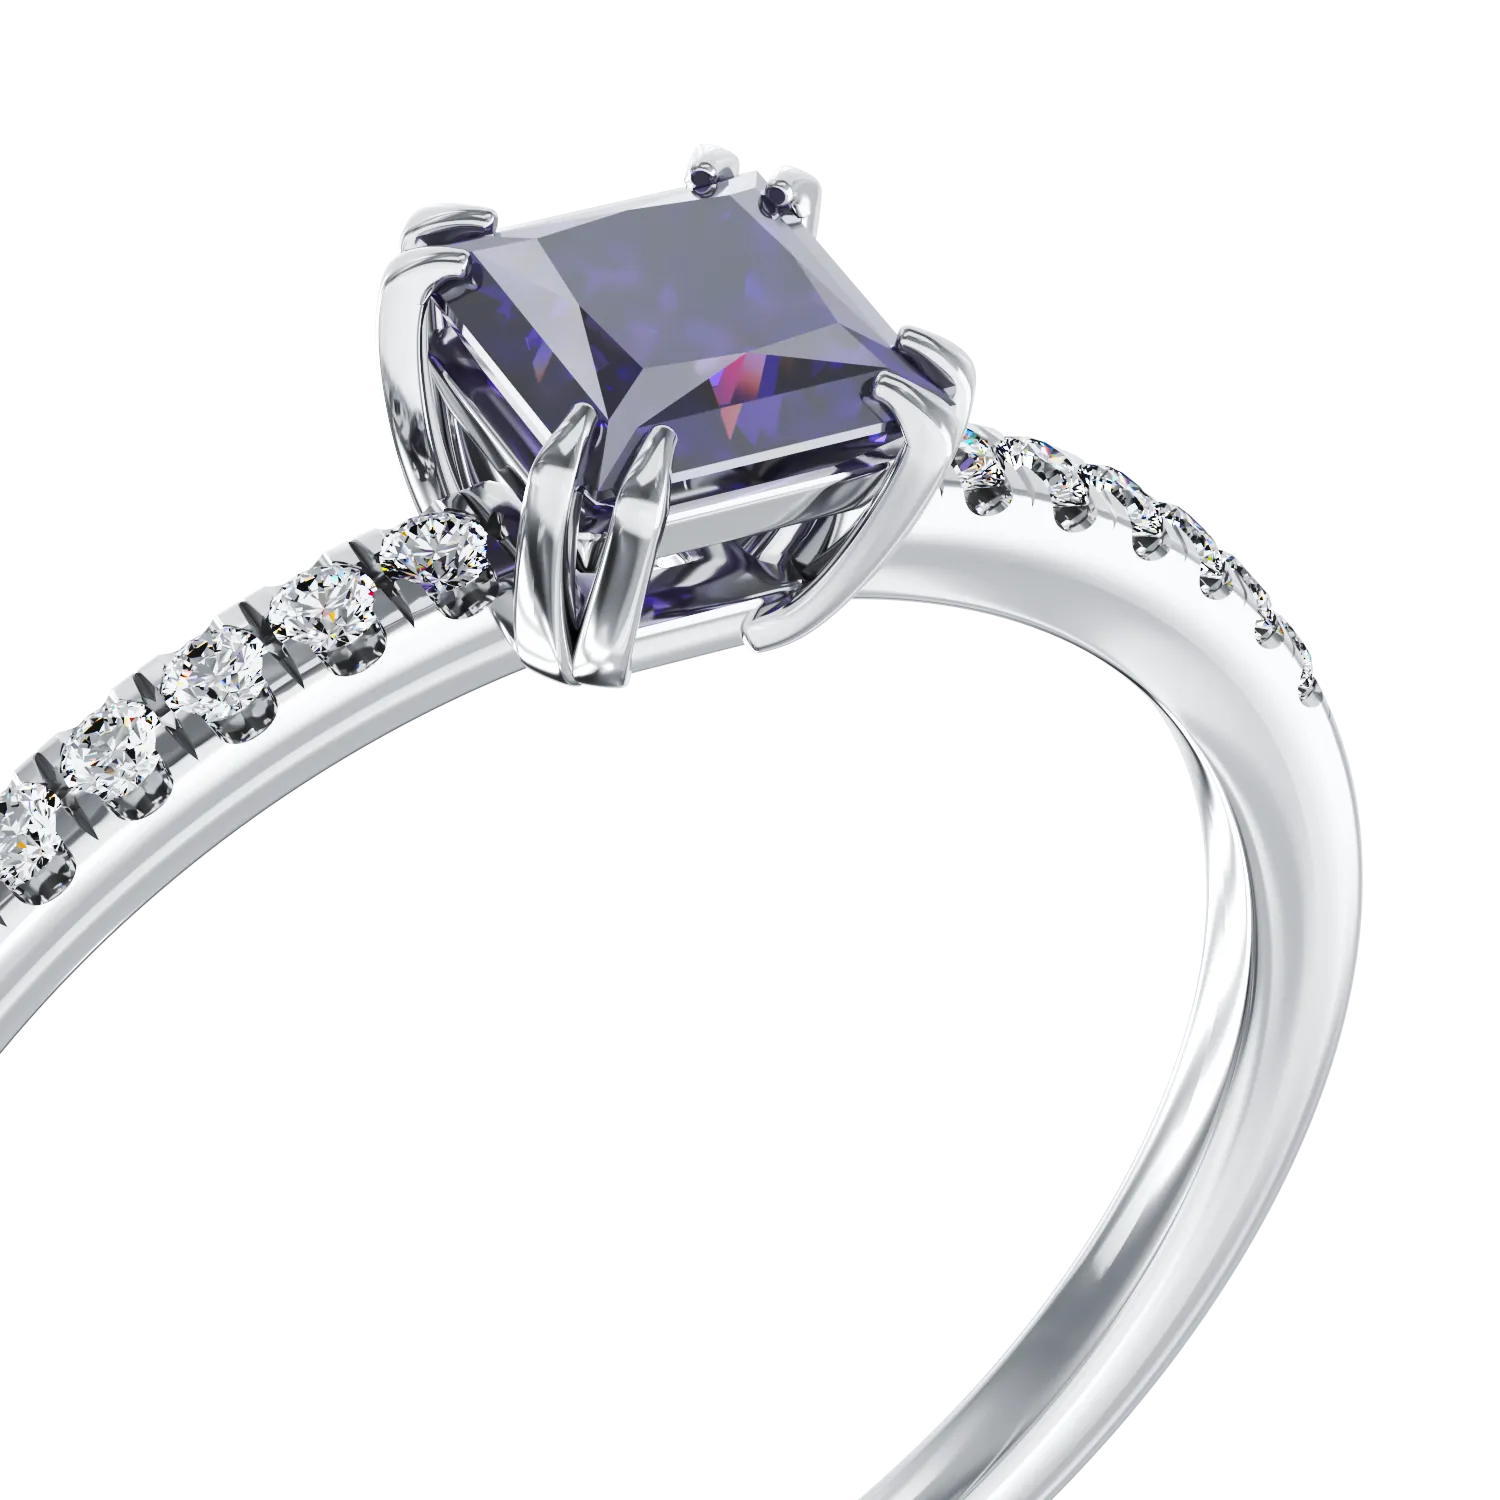 18K white gold engagement ring with 0.38ct tanzanite and 0.05ct diamonds